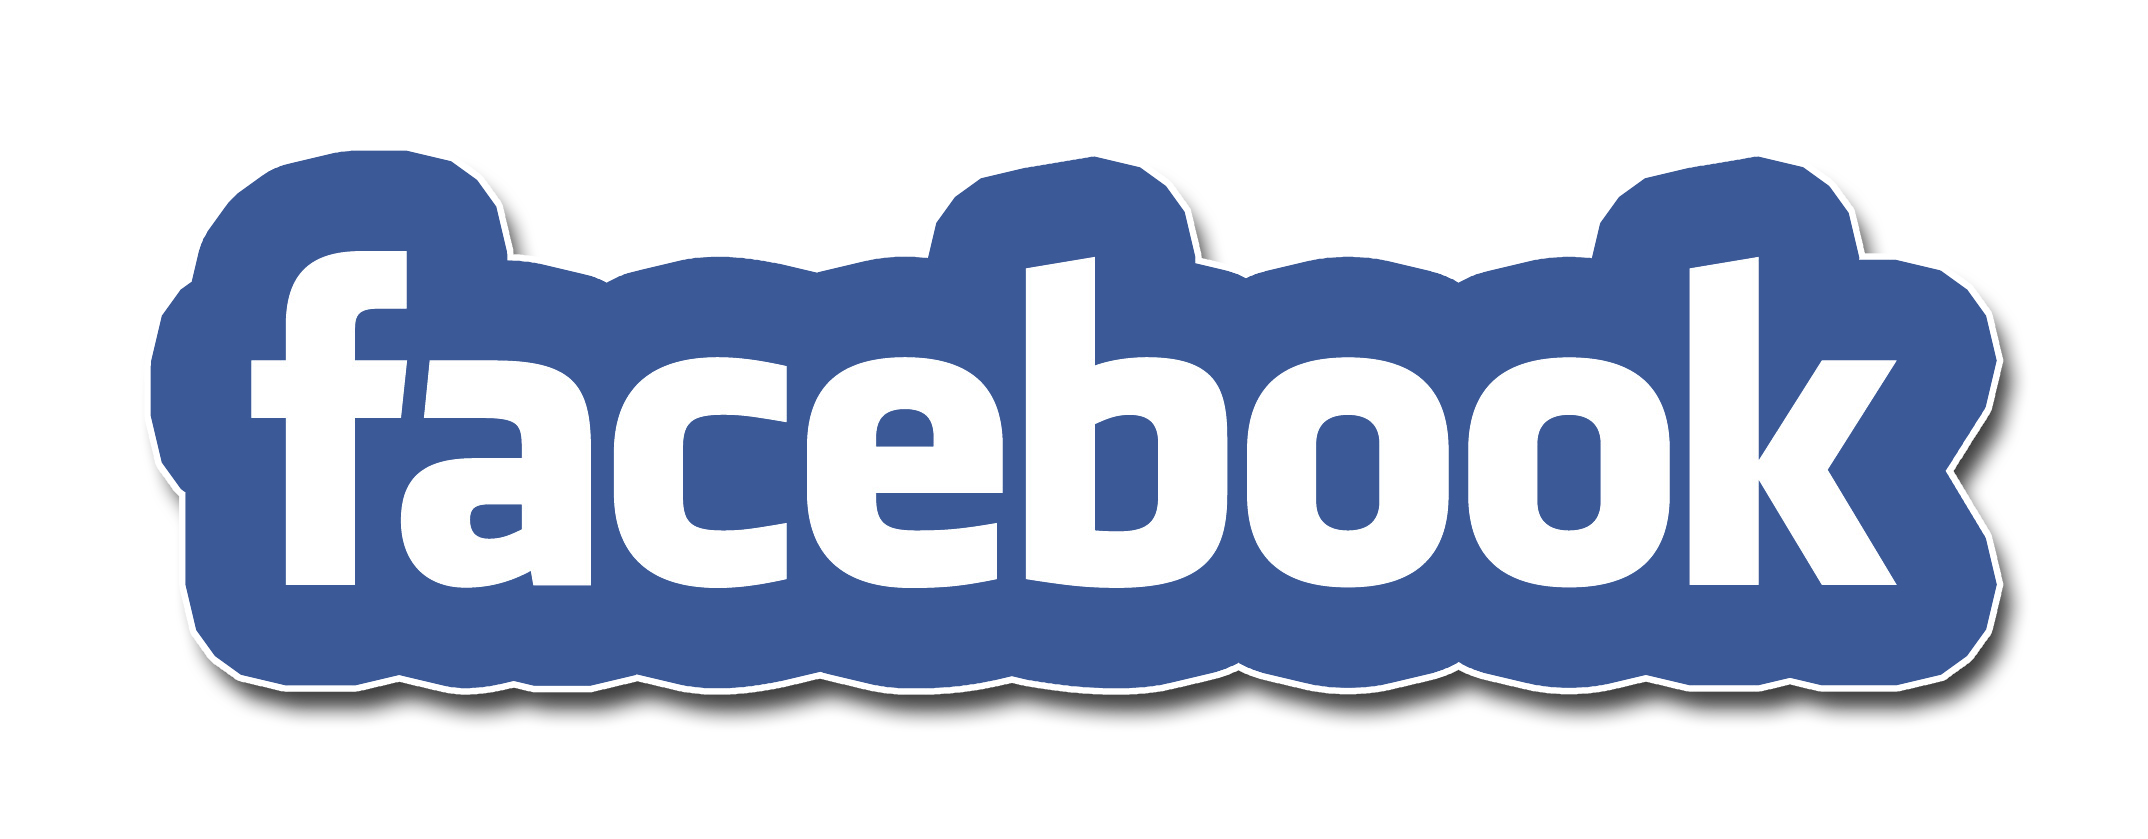 Facebook Text Transparent Logo Image #38364 - Facebook, Transparent background PNG HD thumbnail